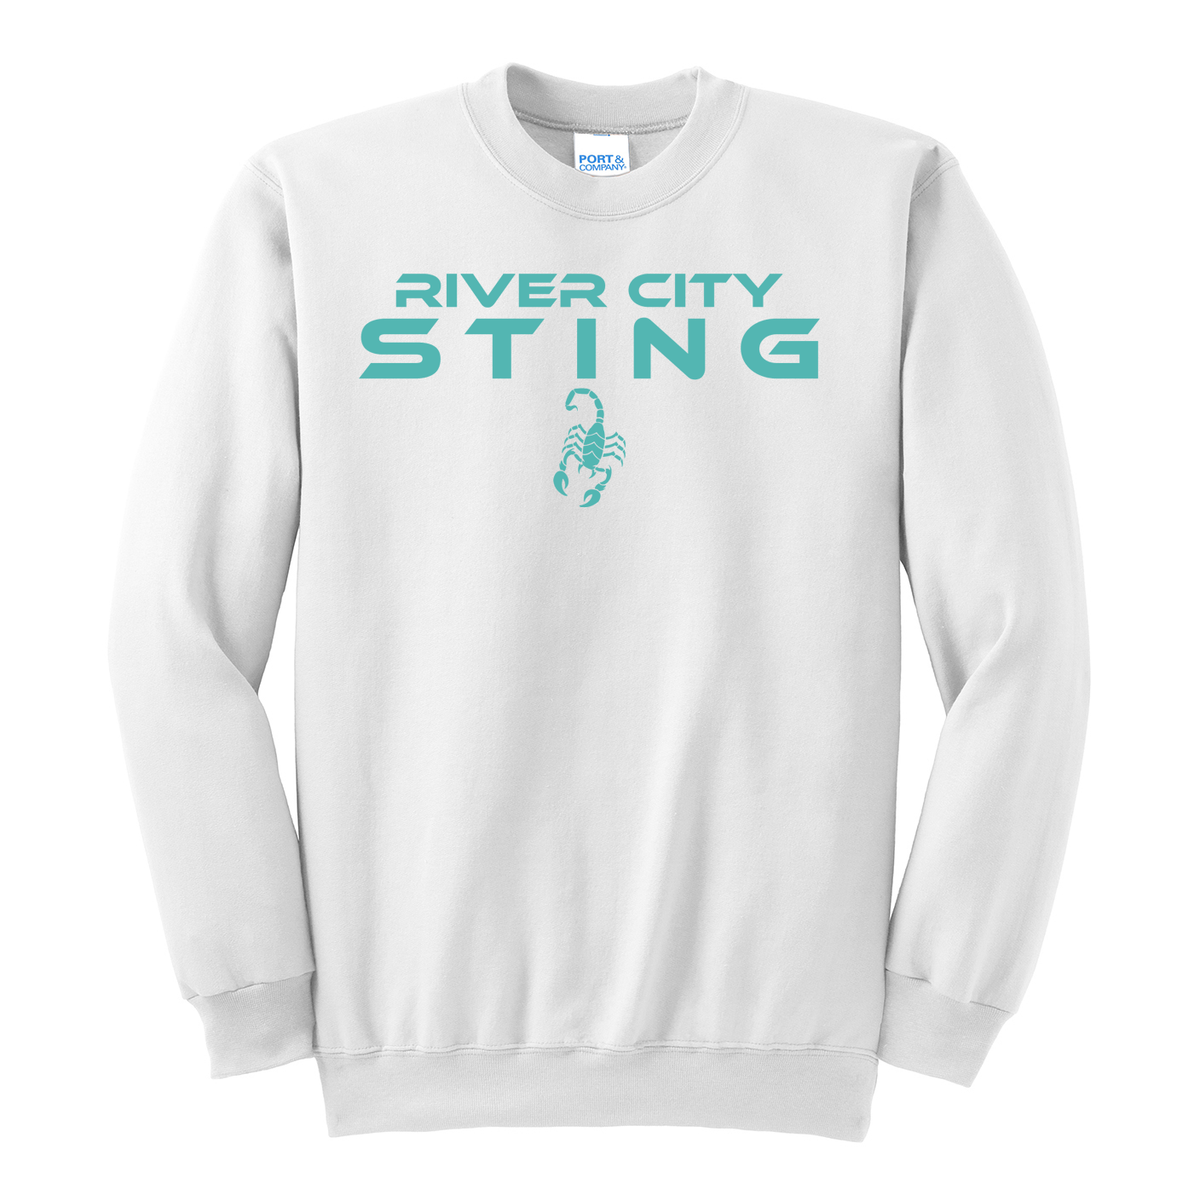 River City Sting Crew Neck Sweater